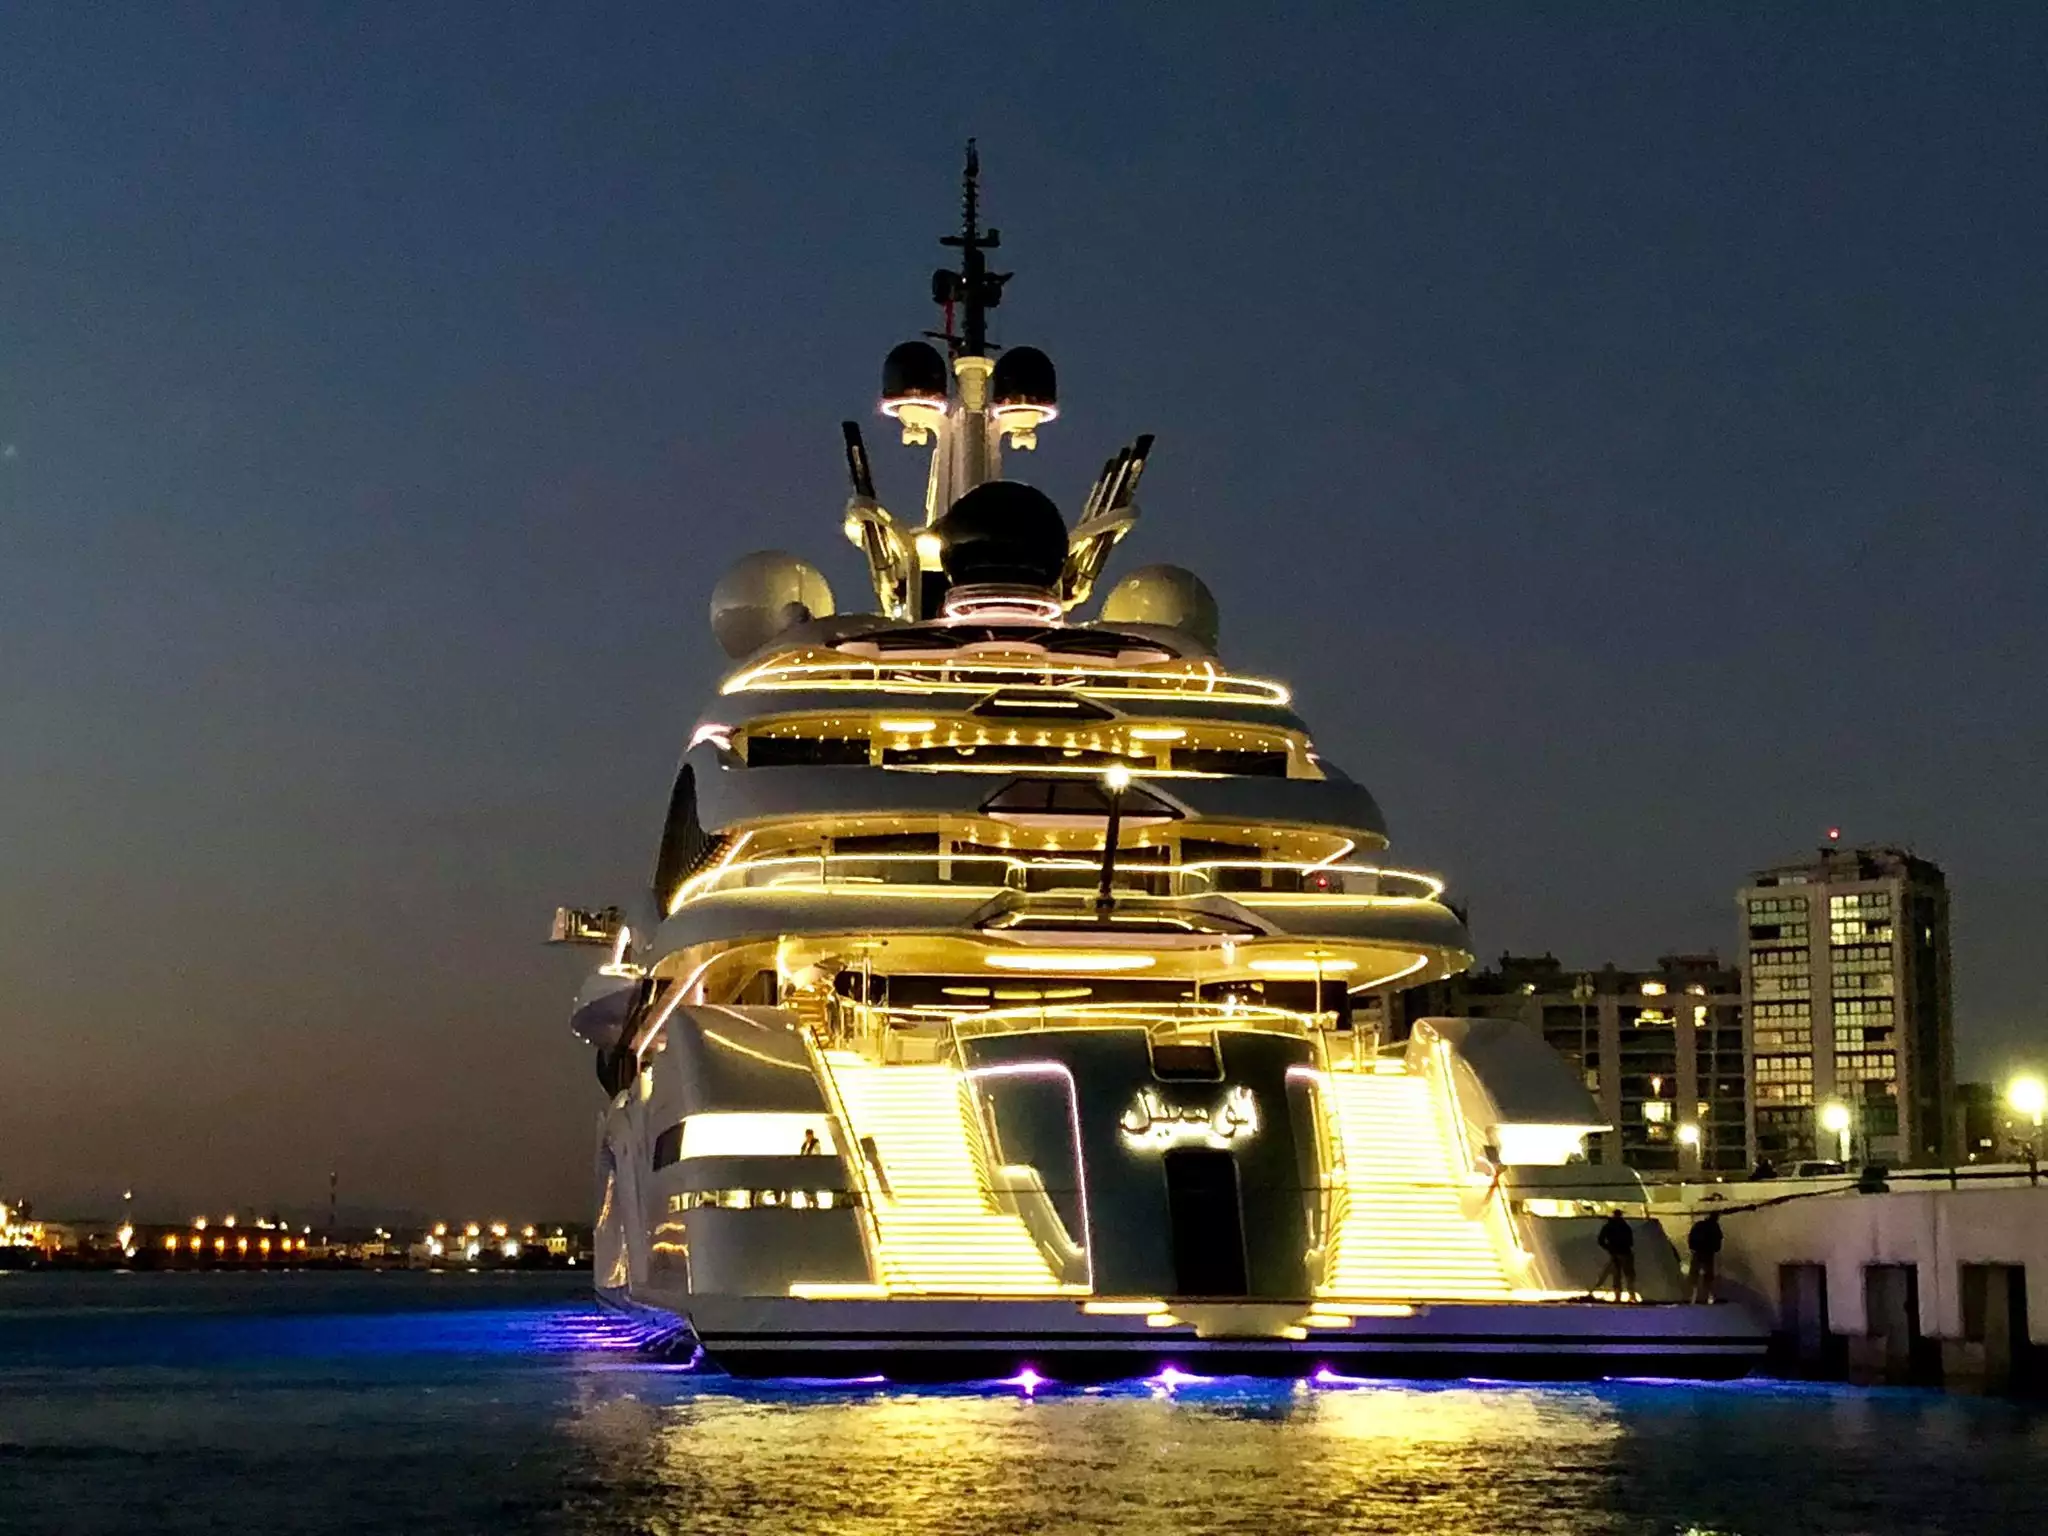 Yacht Al Lusail - Lurssen - 2017 - Emir du Qatar